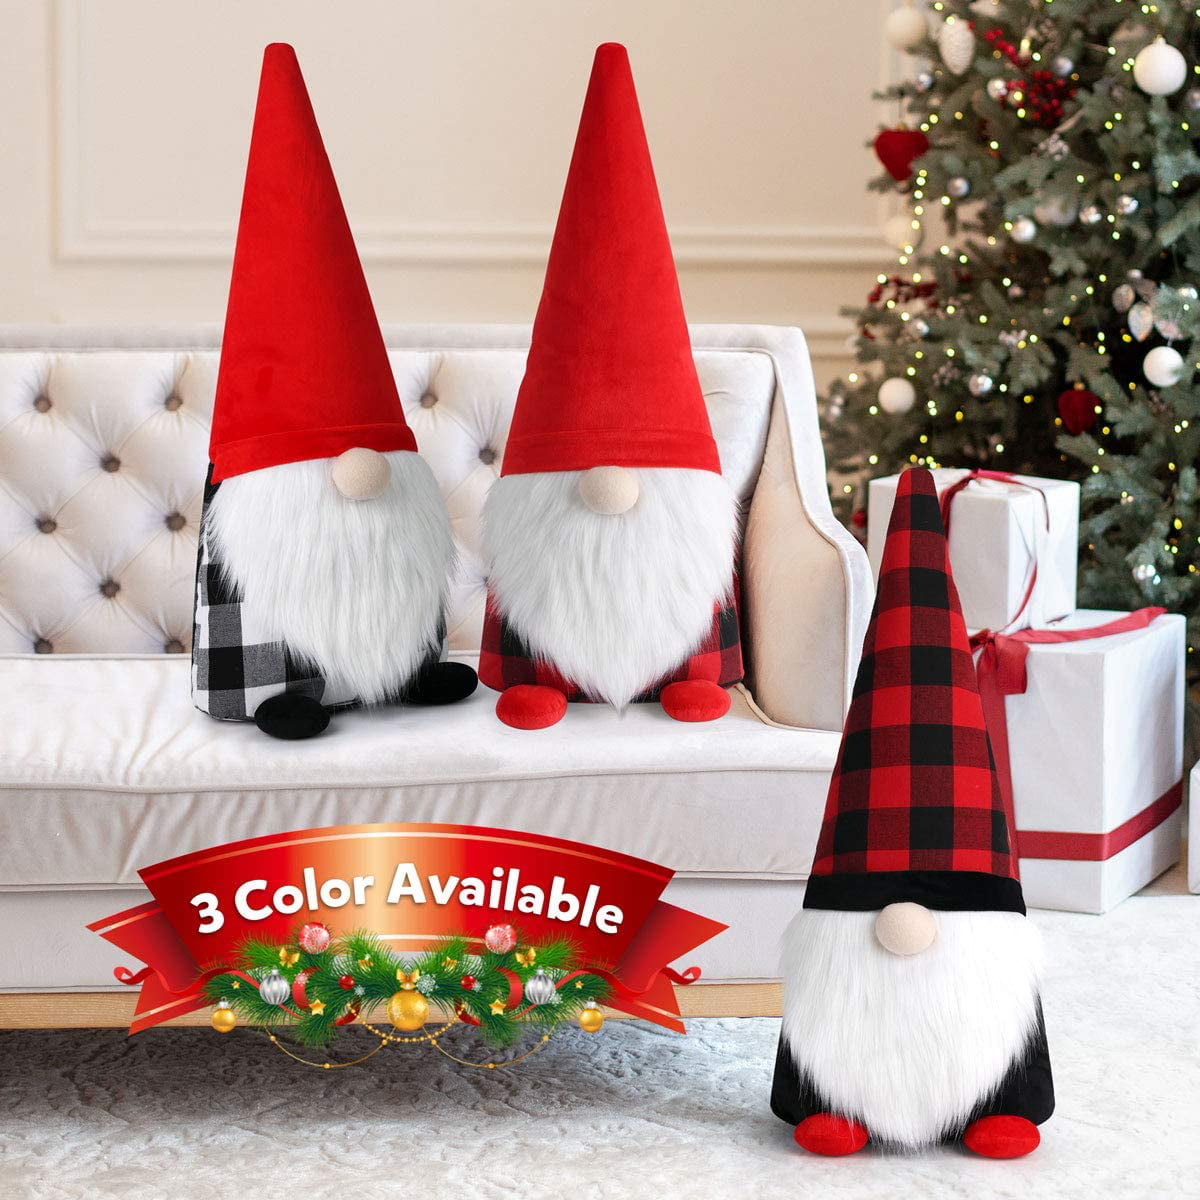 D-FantiX 28 inch Lage Christmas Gnomes Plush Set of 3 